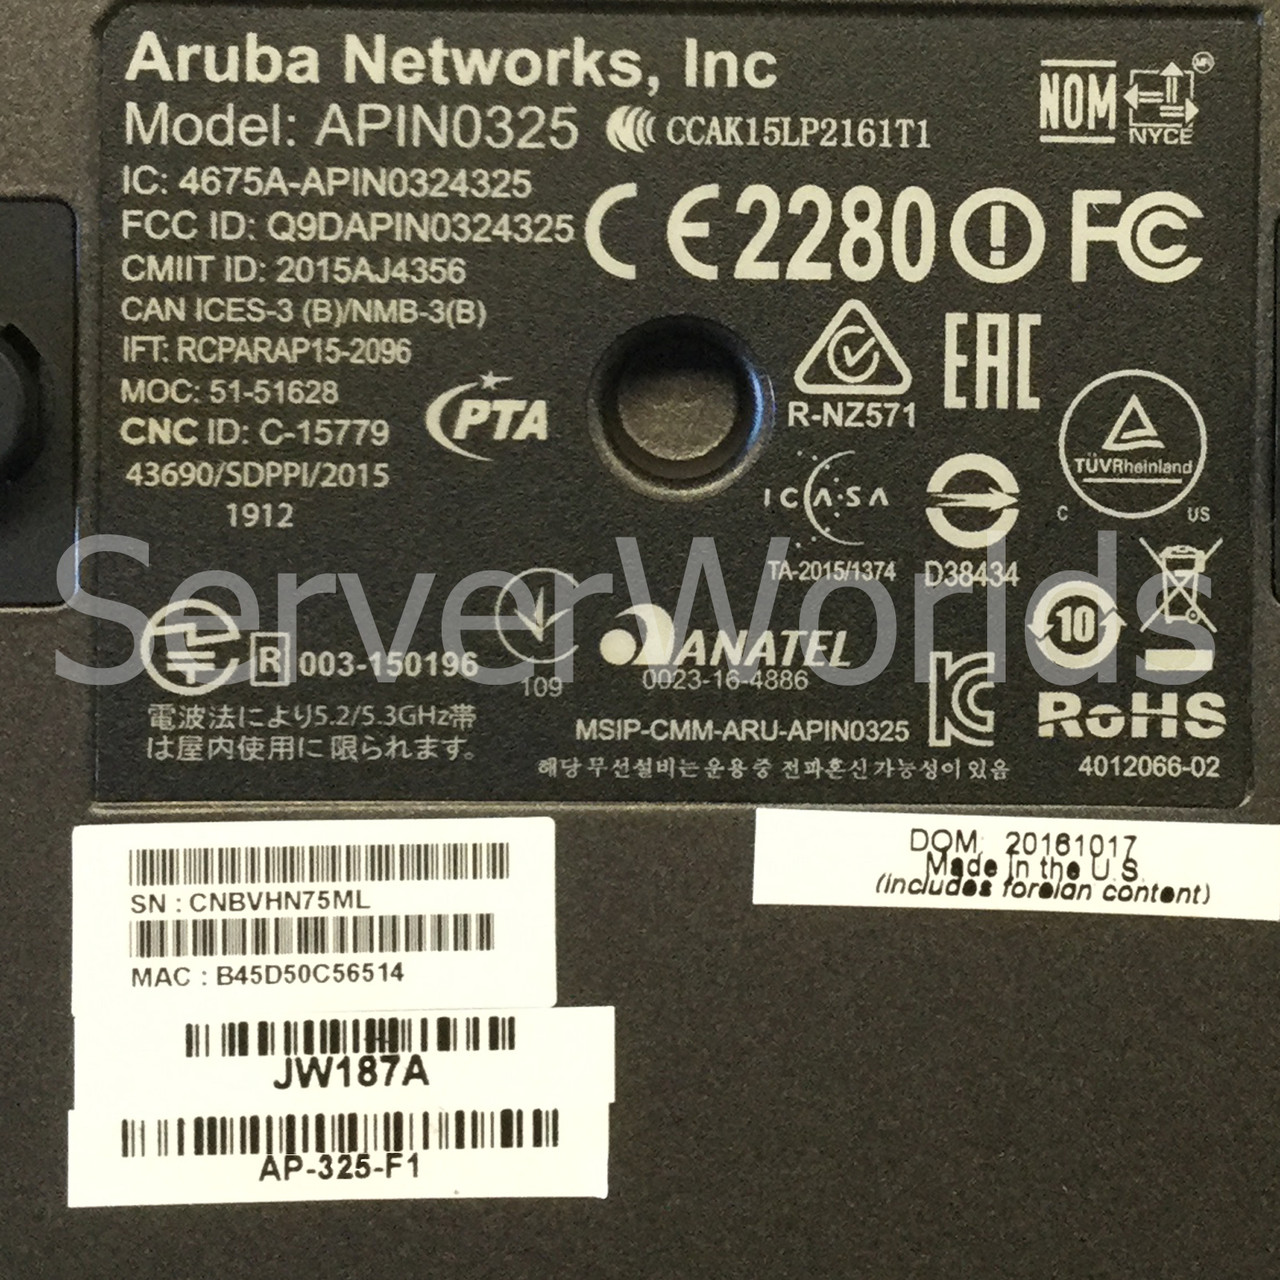 Refurbished HP JW187A Aruba 325 Product Information